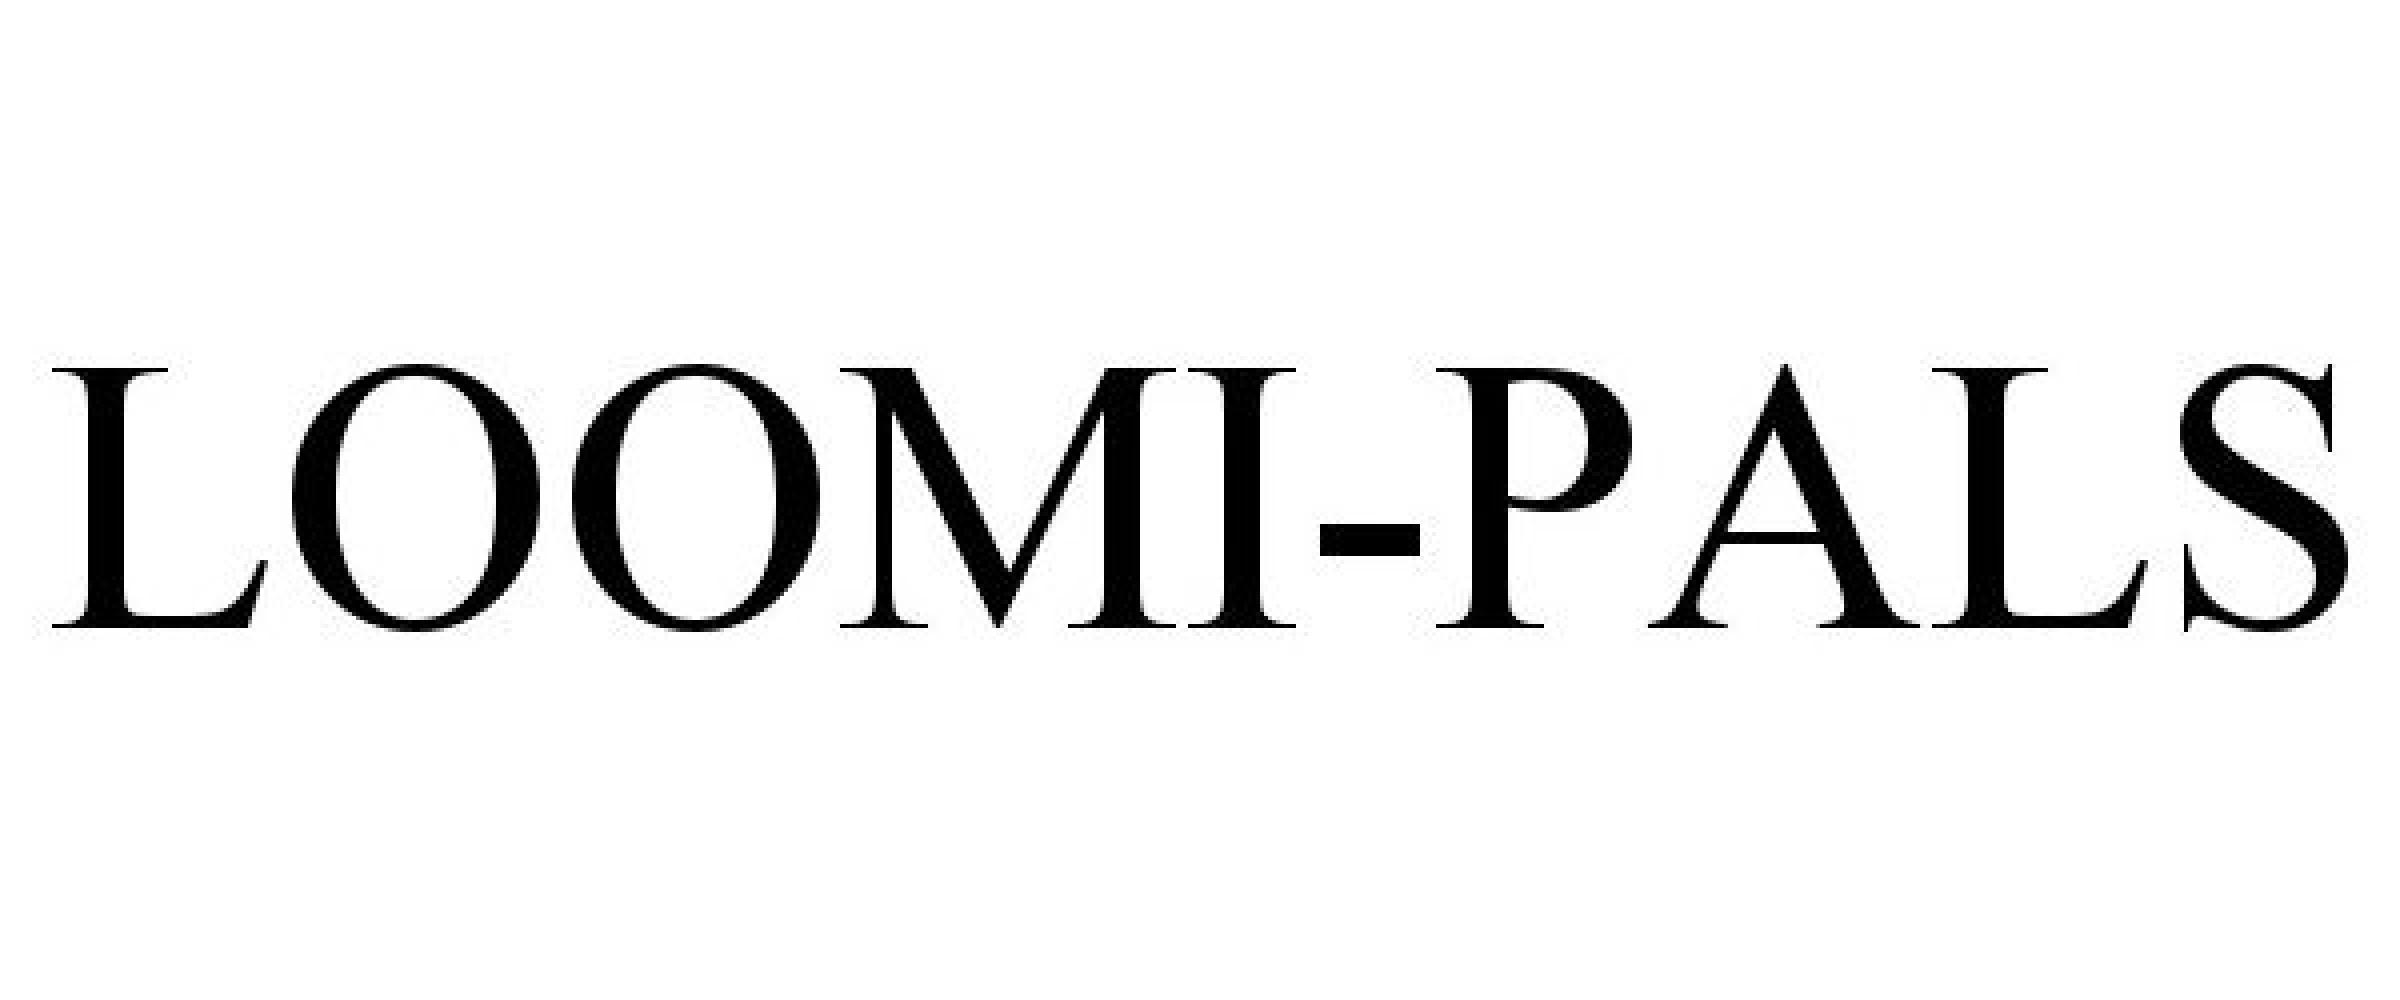 LOOMI-PALS - Choon's Design LLC Trademark Registration